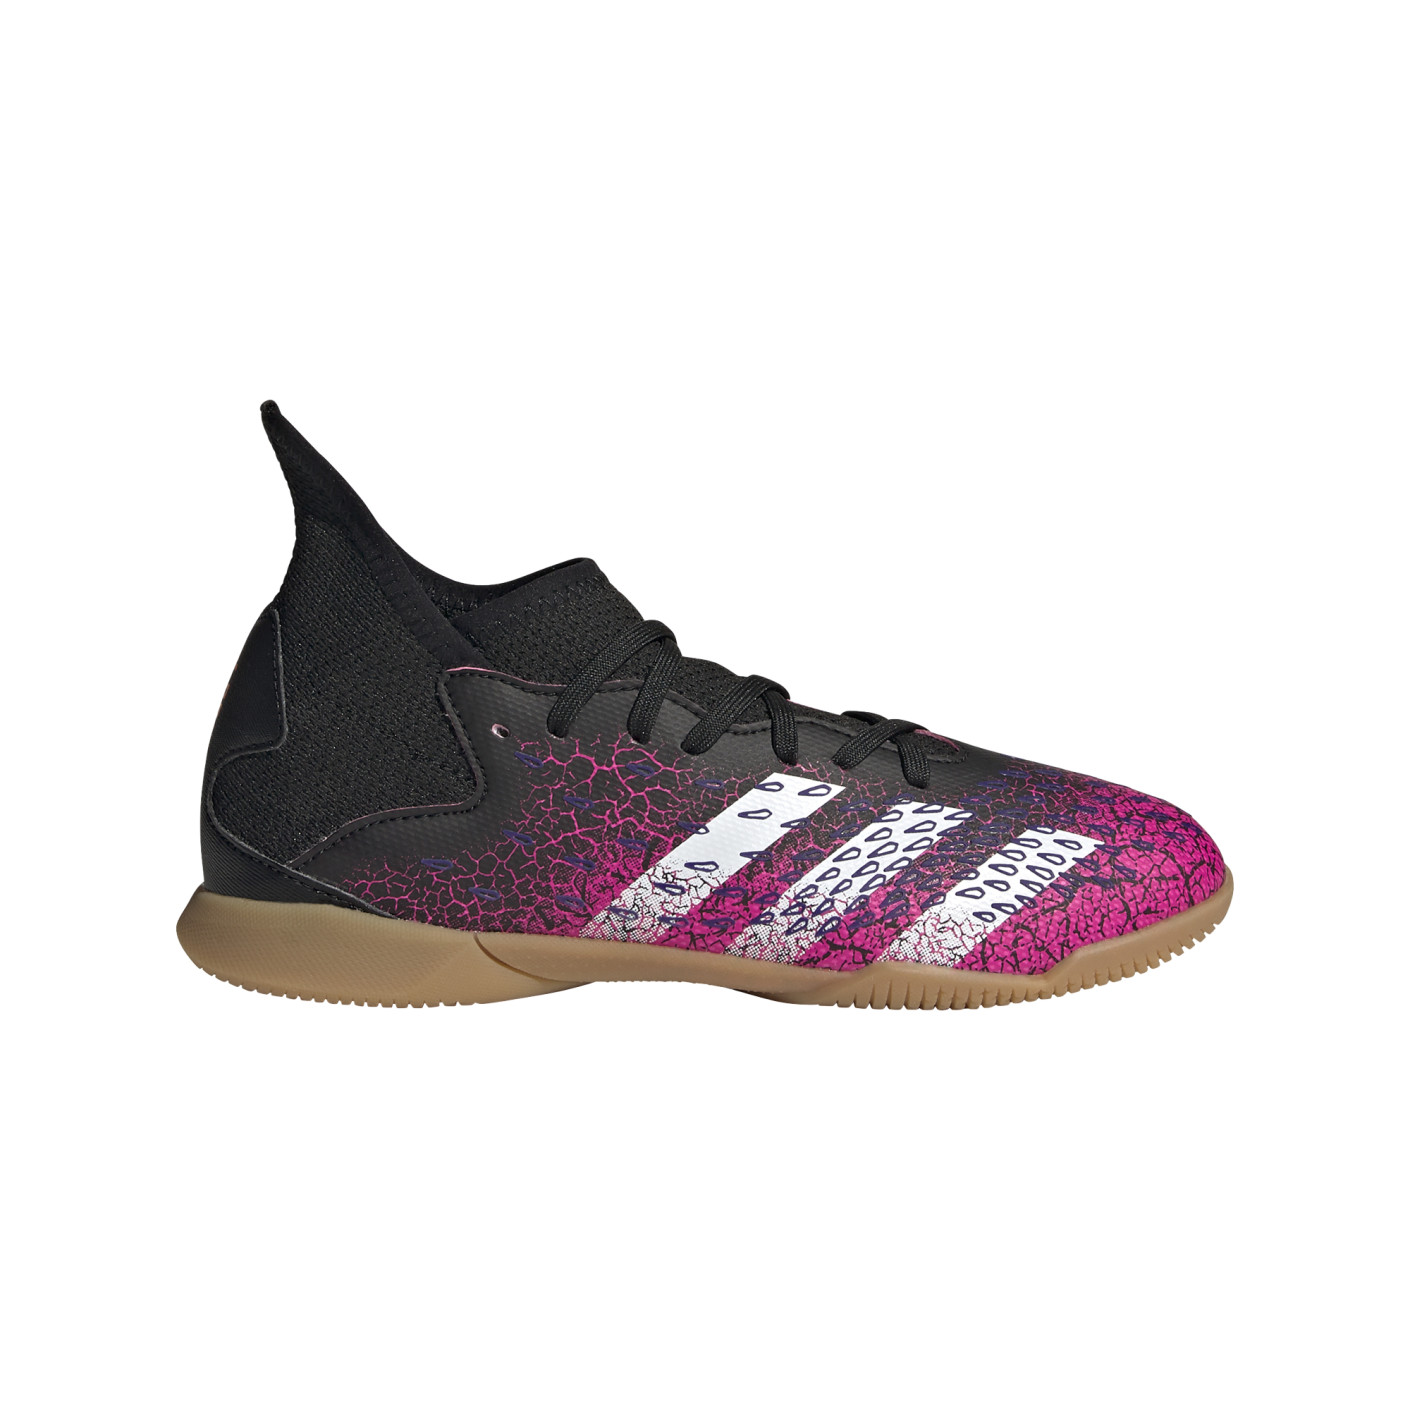 adidas Predator Freak.3 Chaussures de football en salle (IN) pour enfants Noir/blanc/rose